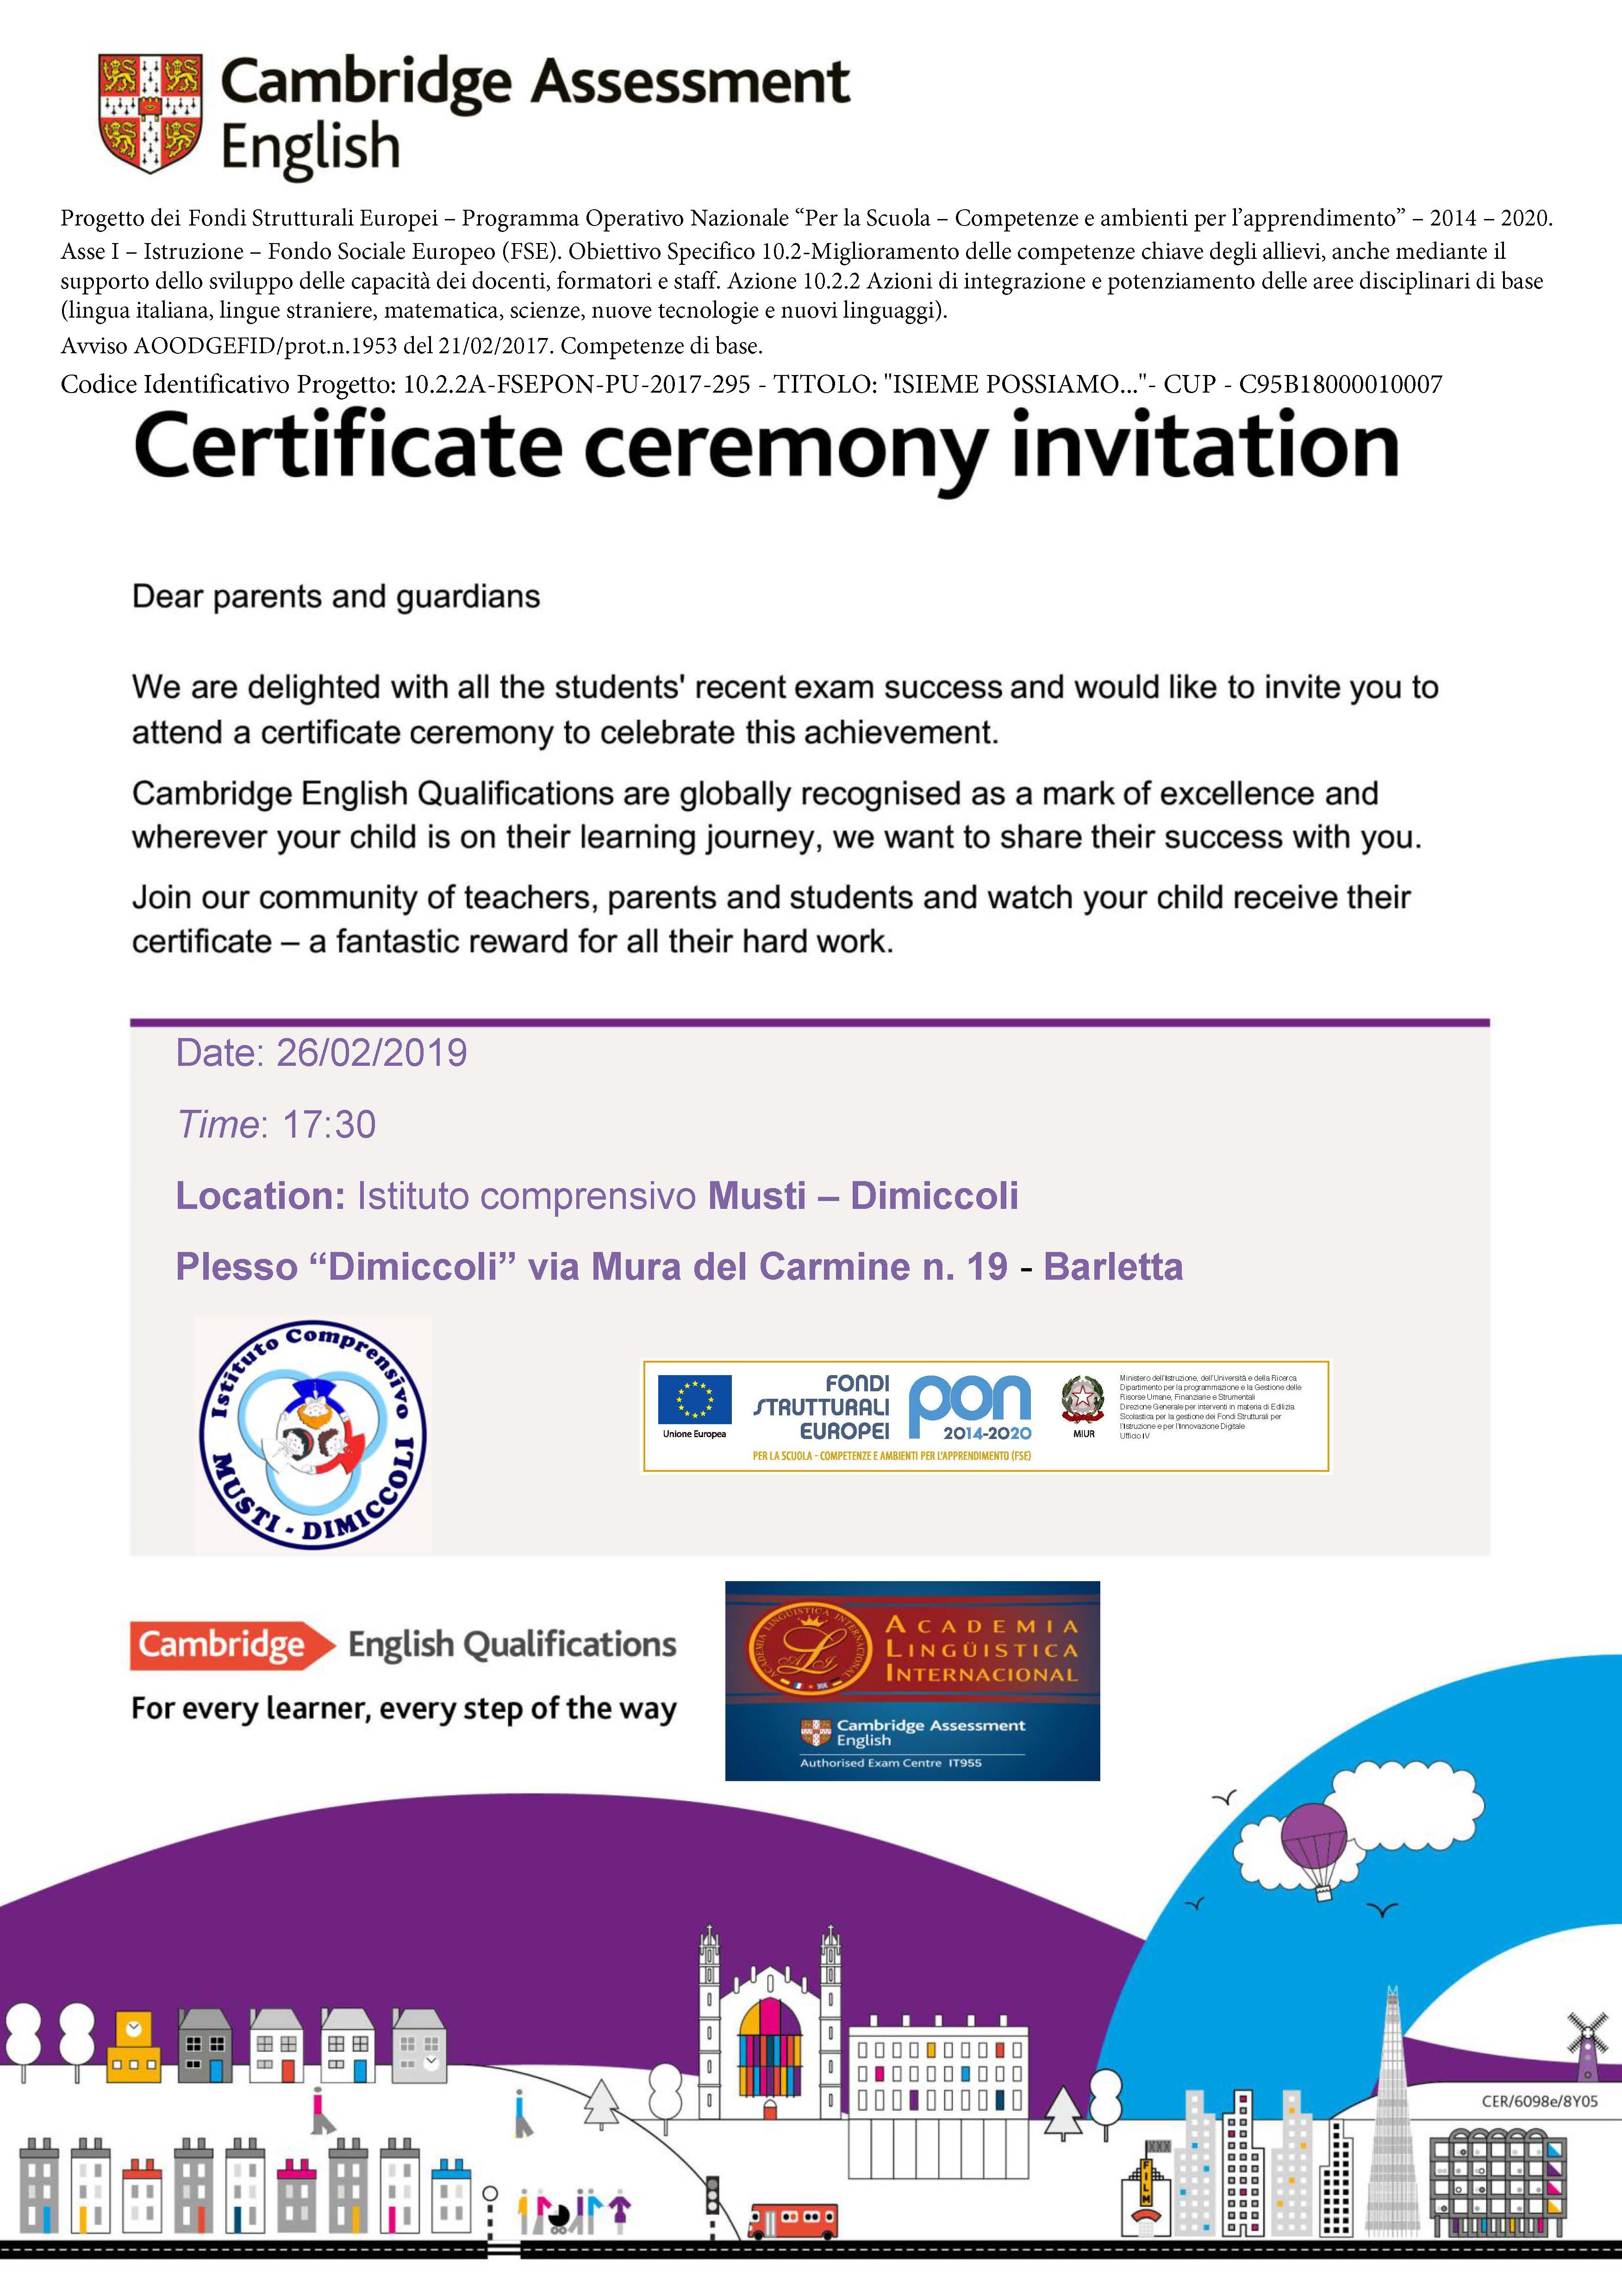 certificateceremonyinvitationtoparents 1